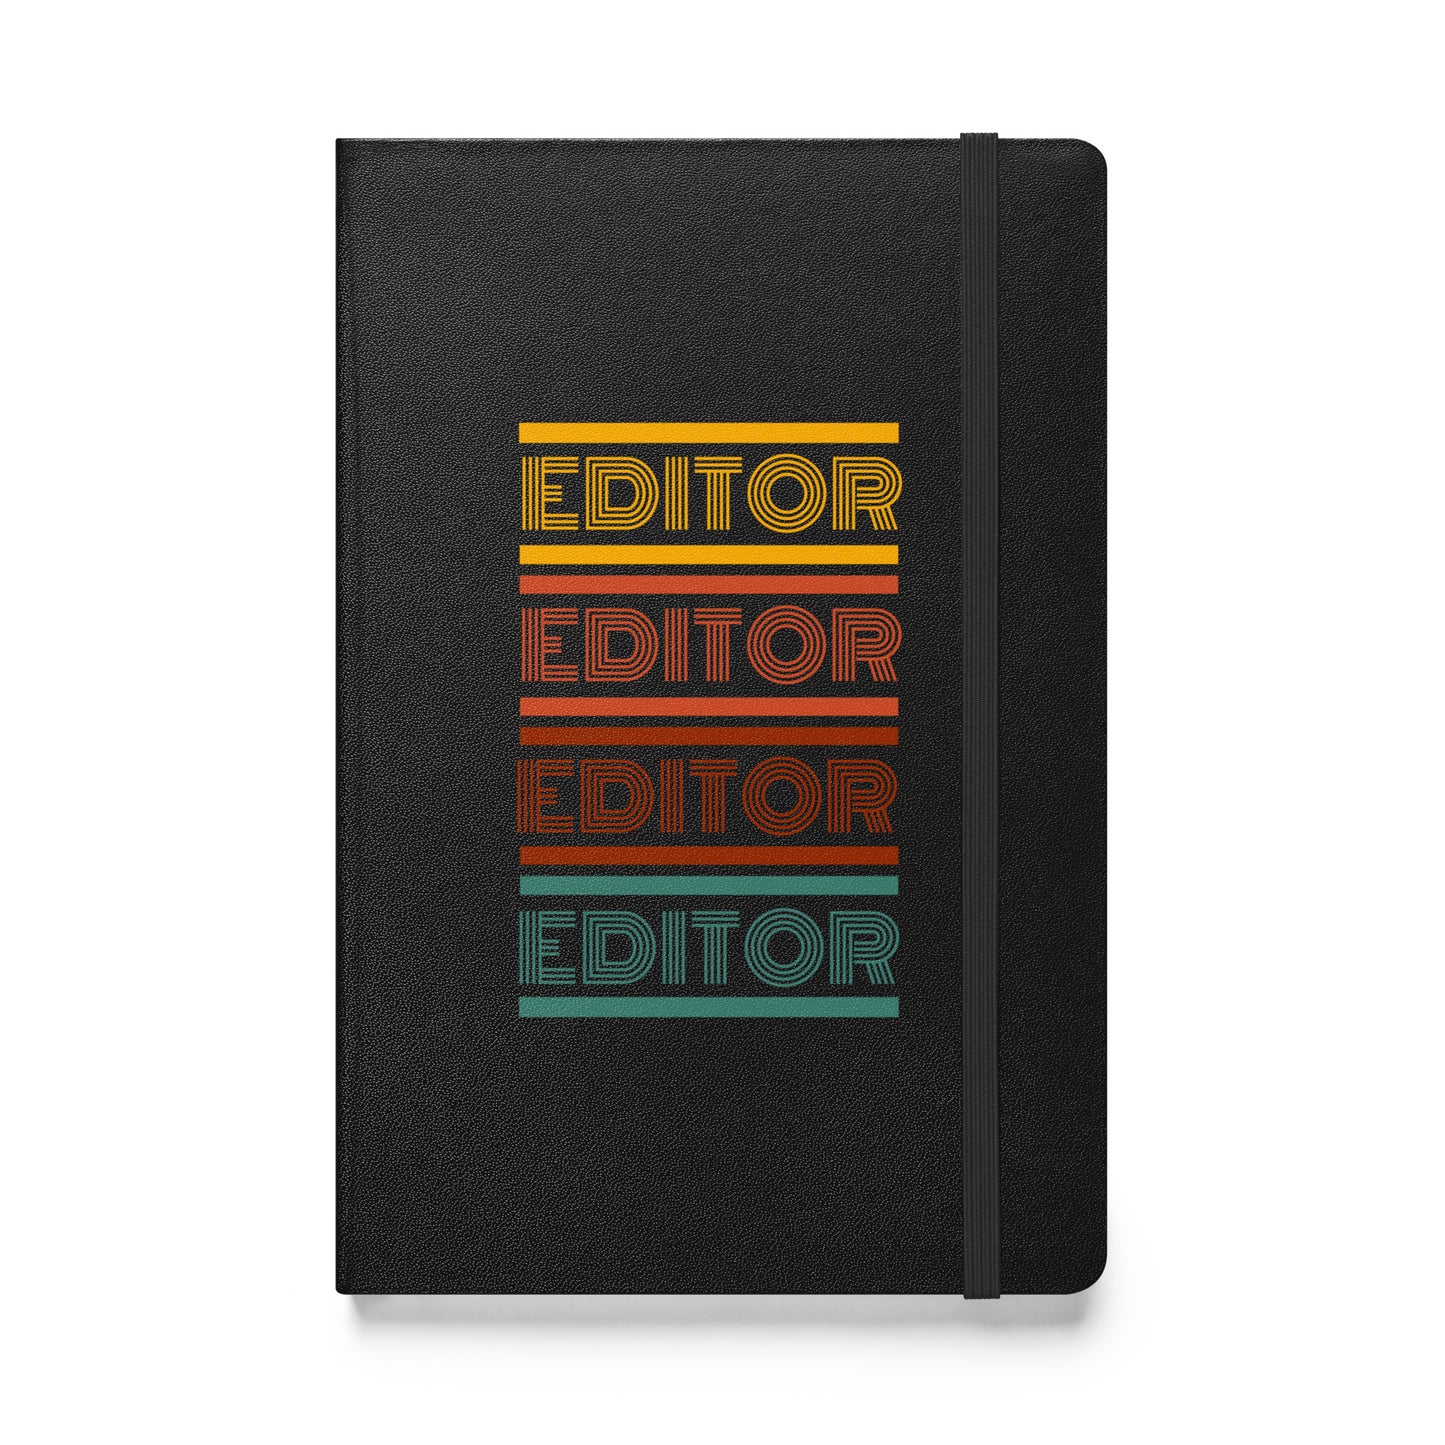 Hardcover bound notebook Editor Retro - CineQuips